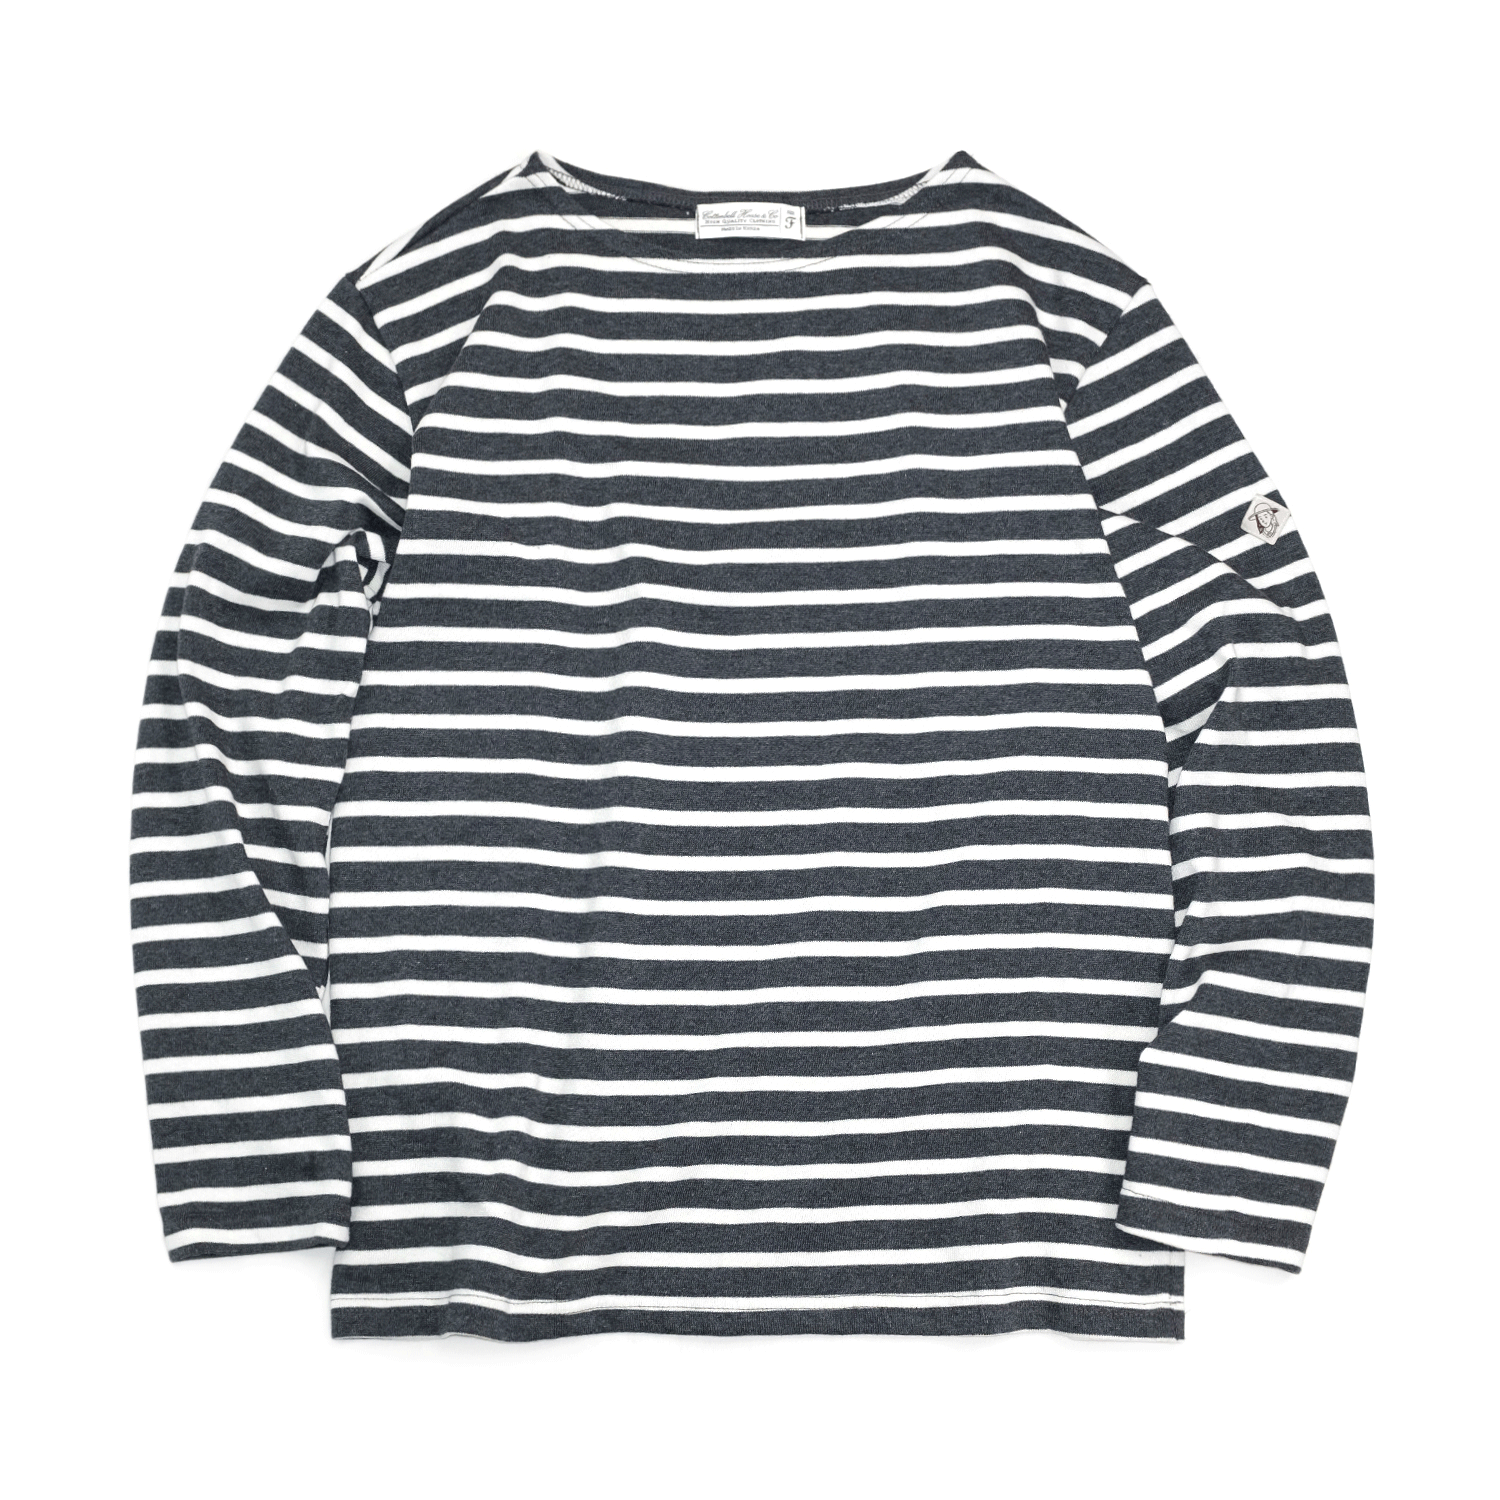 Boat Neck Stripe Tee Shirts - Gray/Ivory Stripe